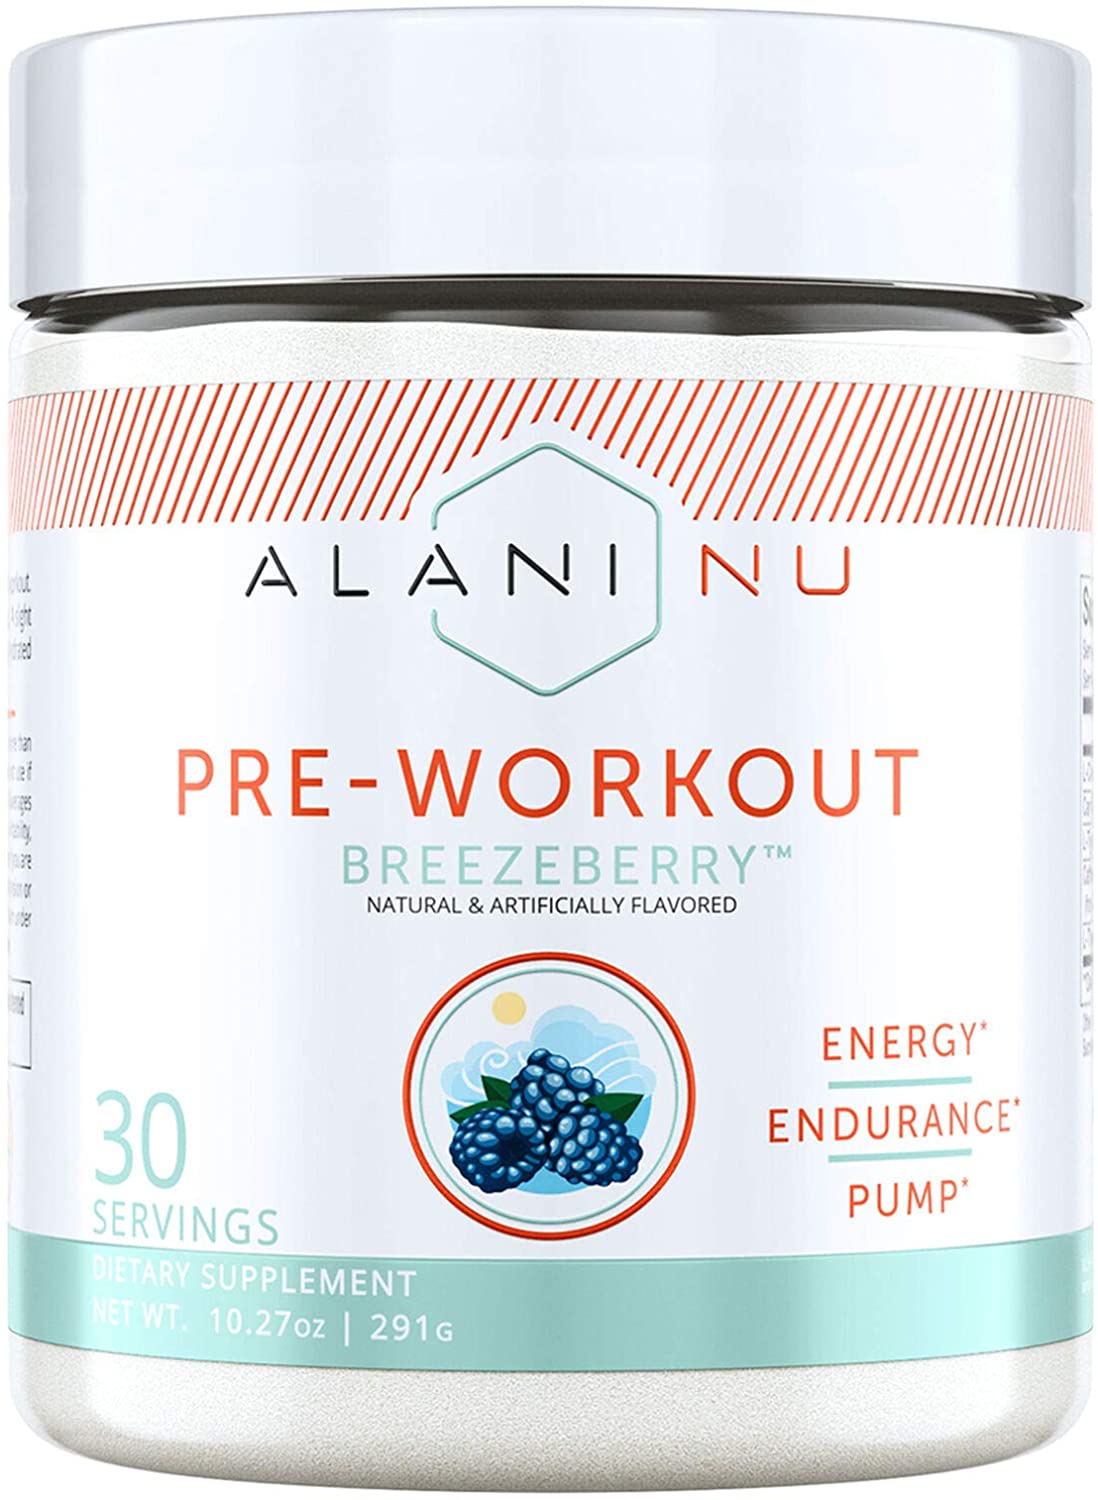 Alani Nu Pre-Workout 300g / Breezeberry